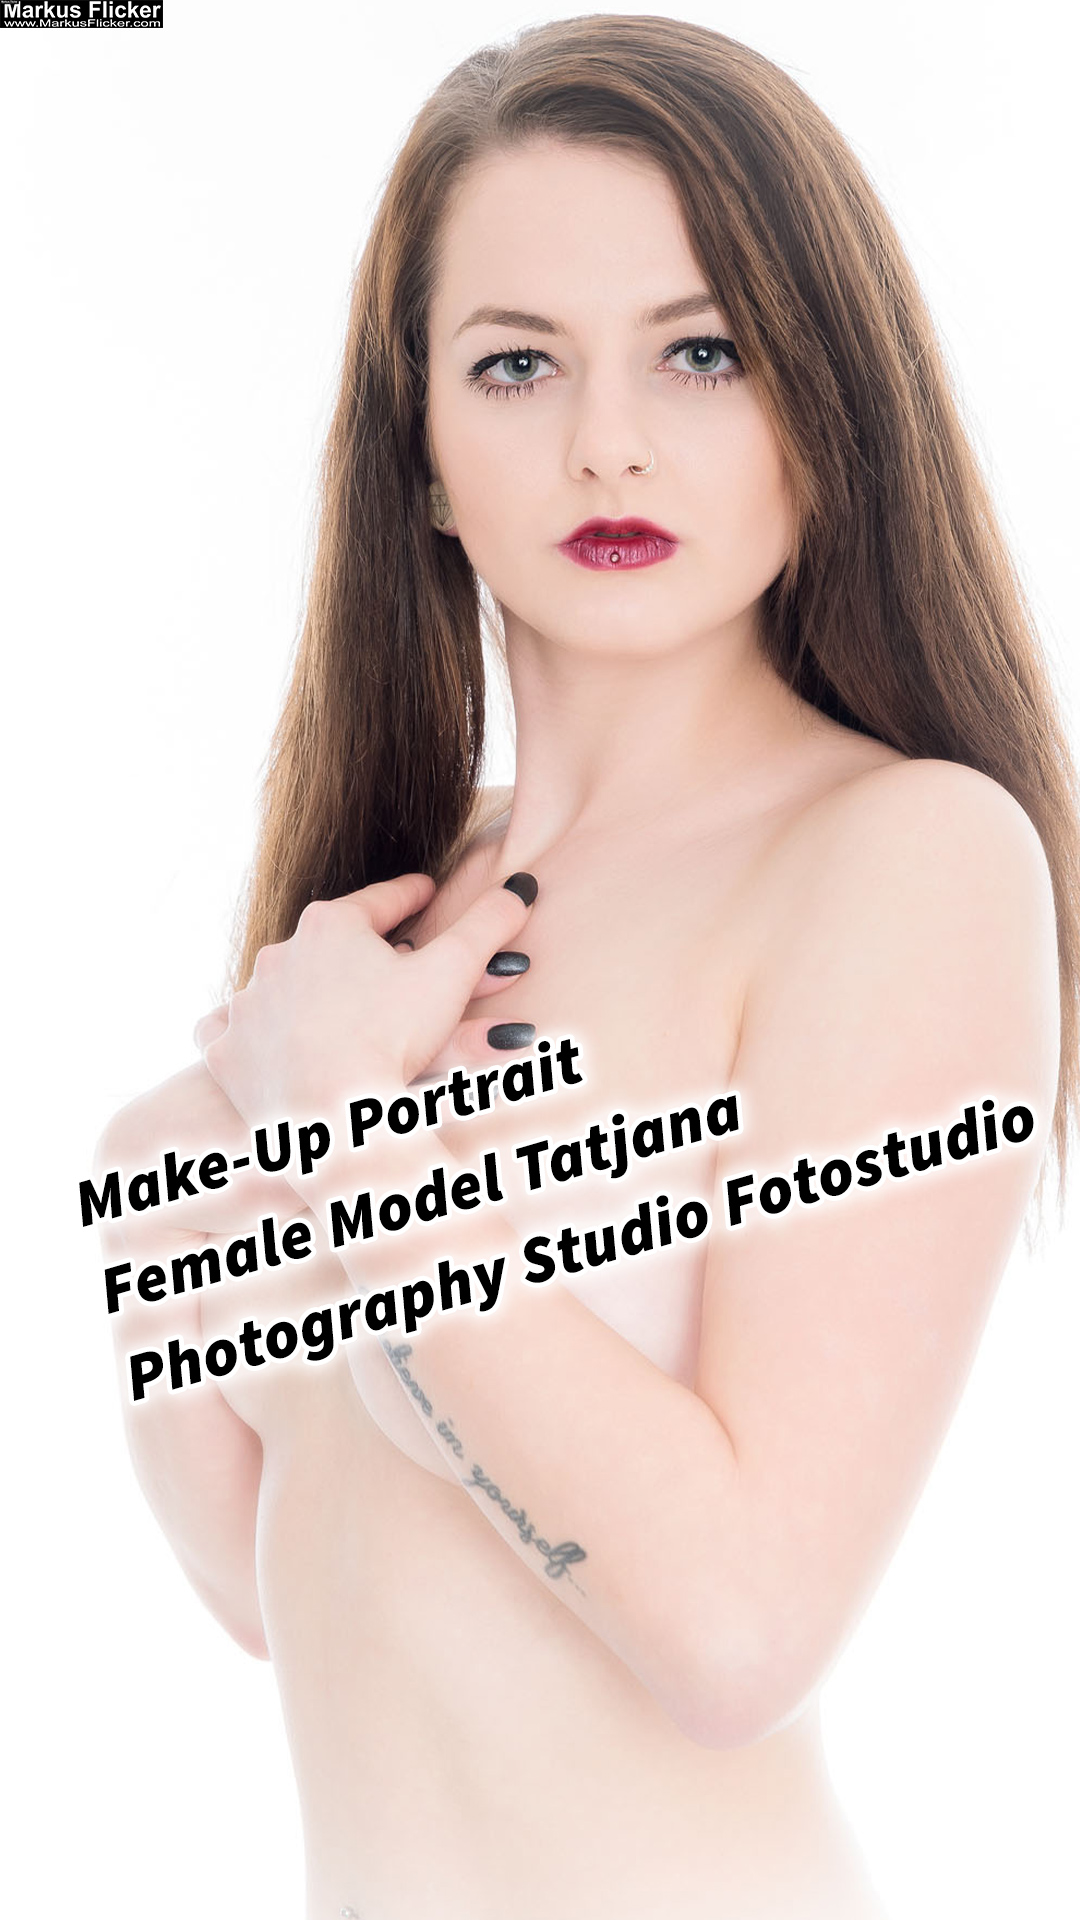 Make-Up Portrait Female Model Tatjana Photography Studio Fotostudio